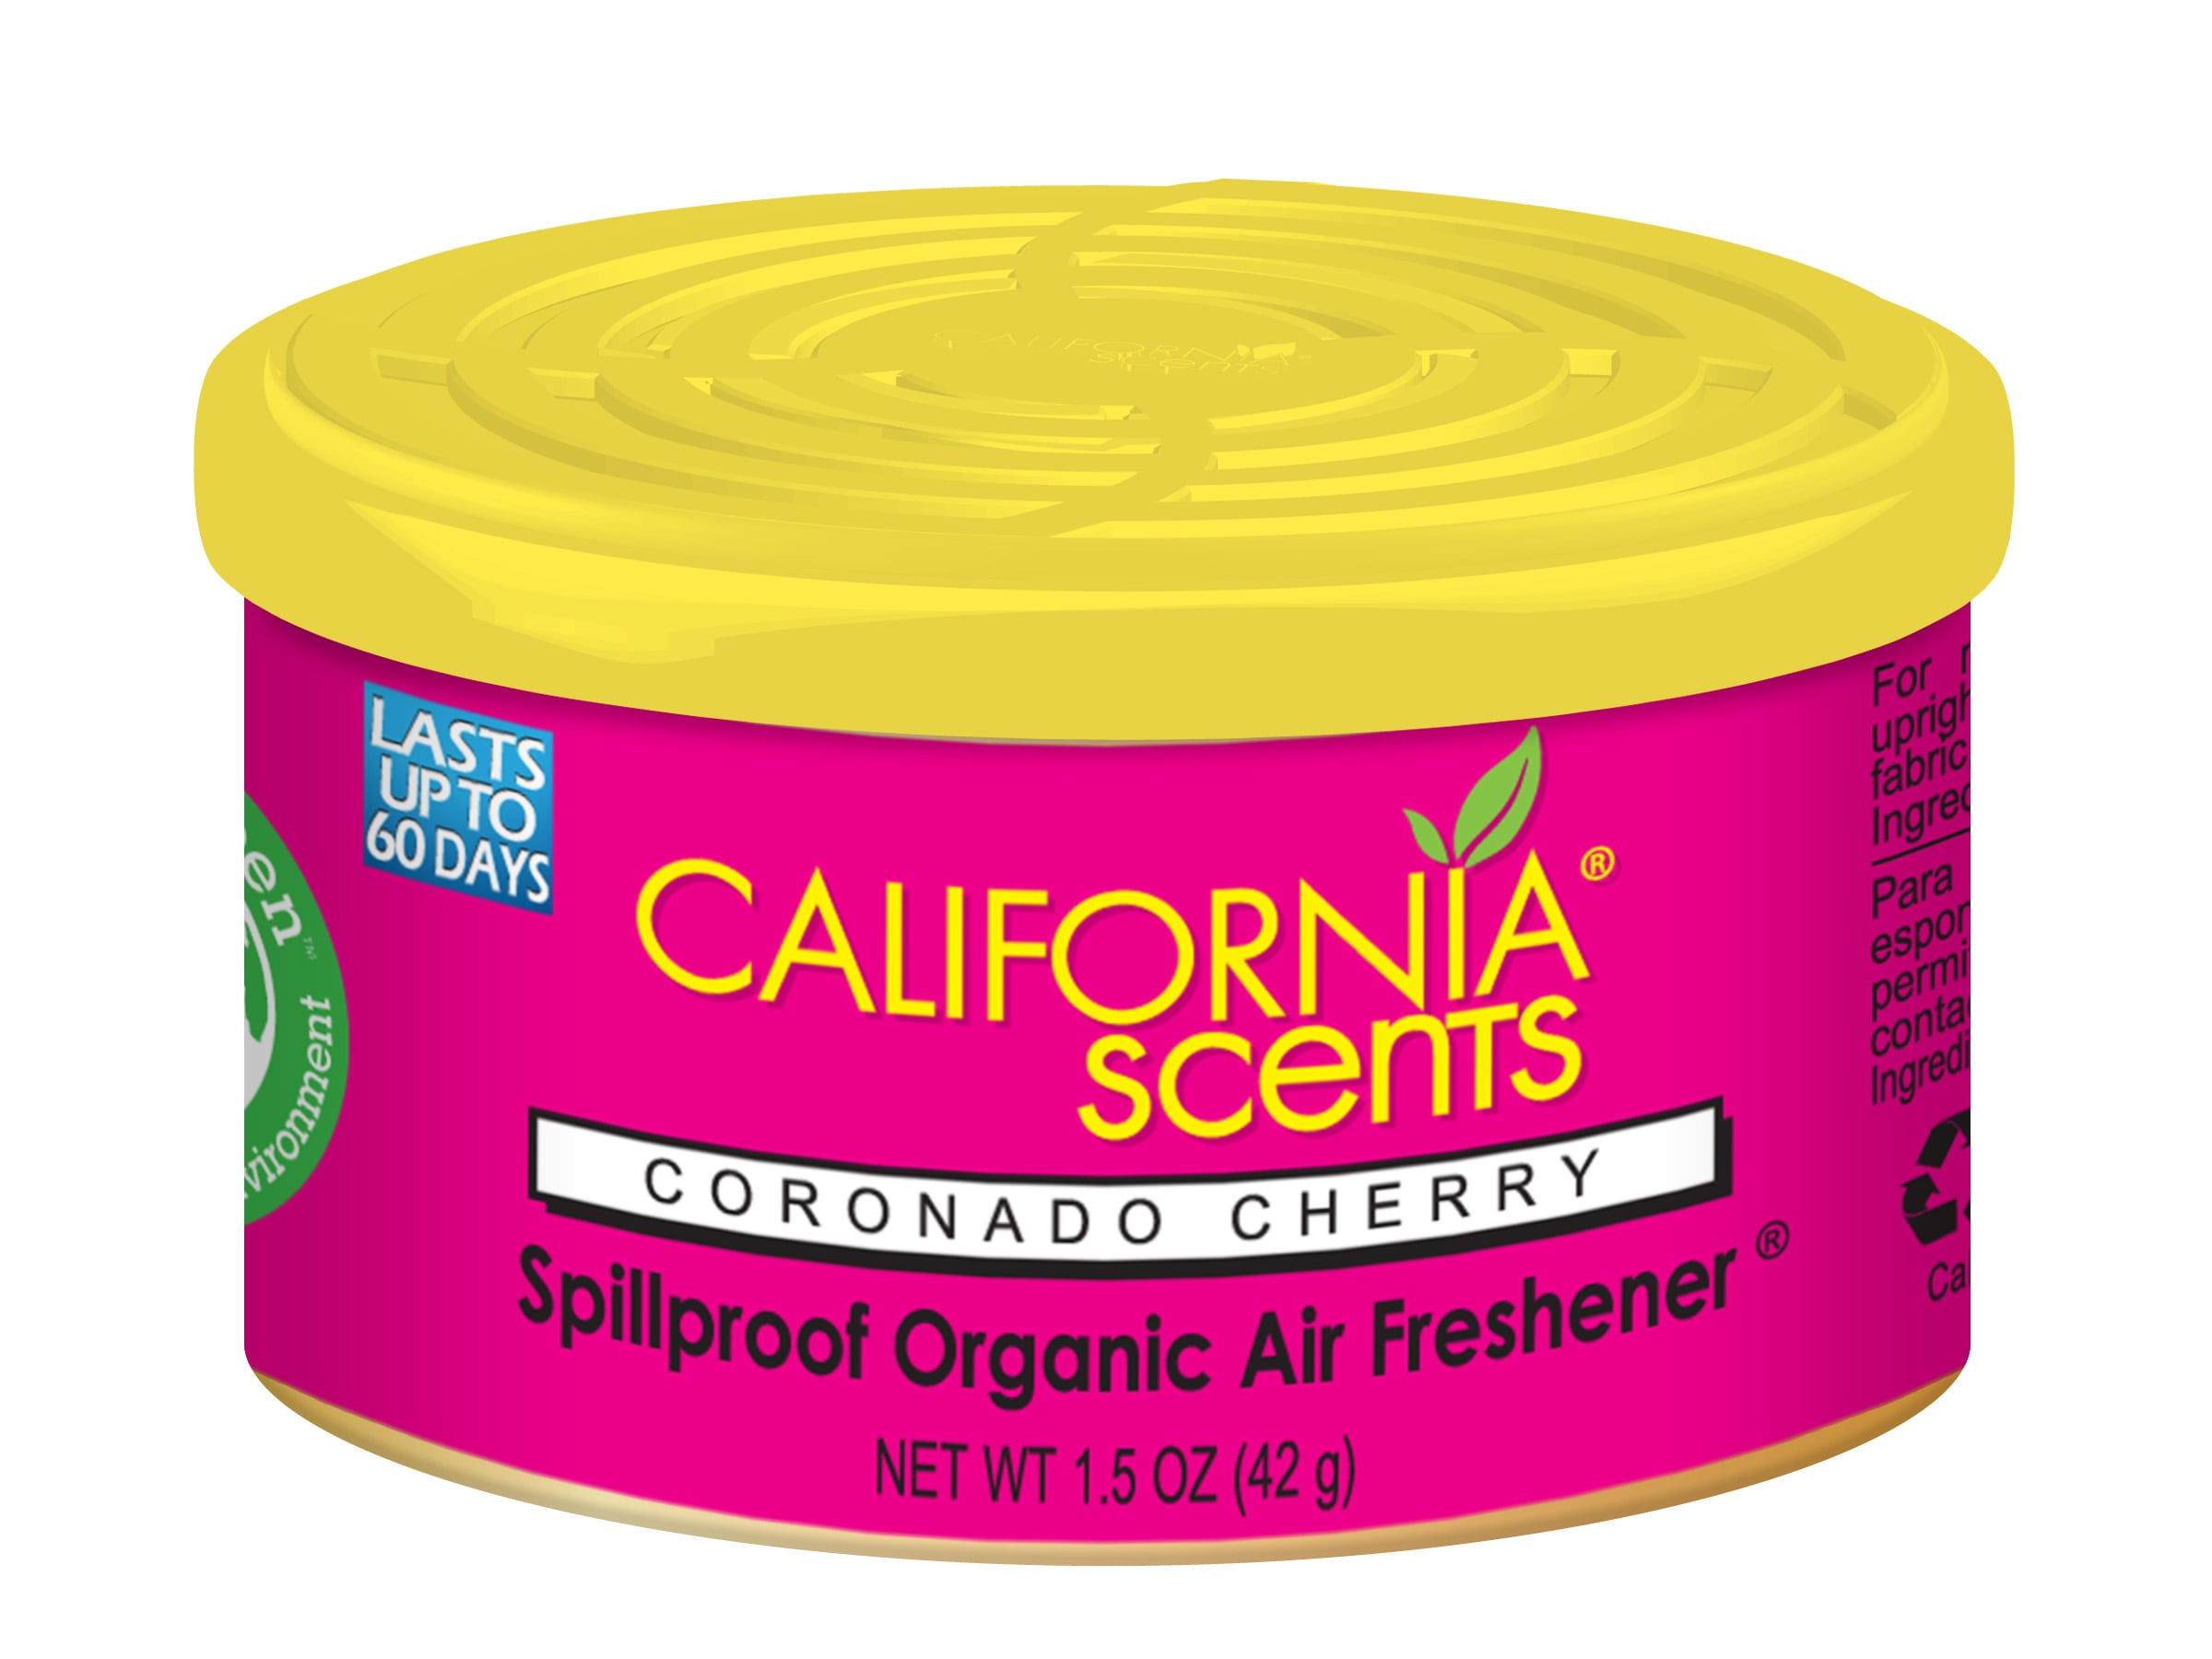 California Scents Air Freshener, Spillproof Organic, Coronado Cherry - 1.5 oz